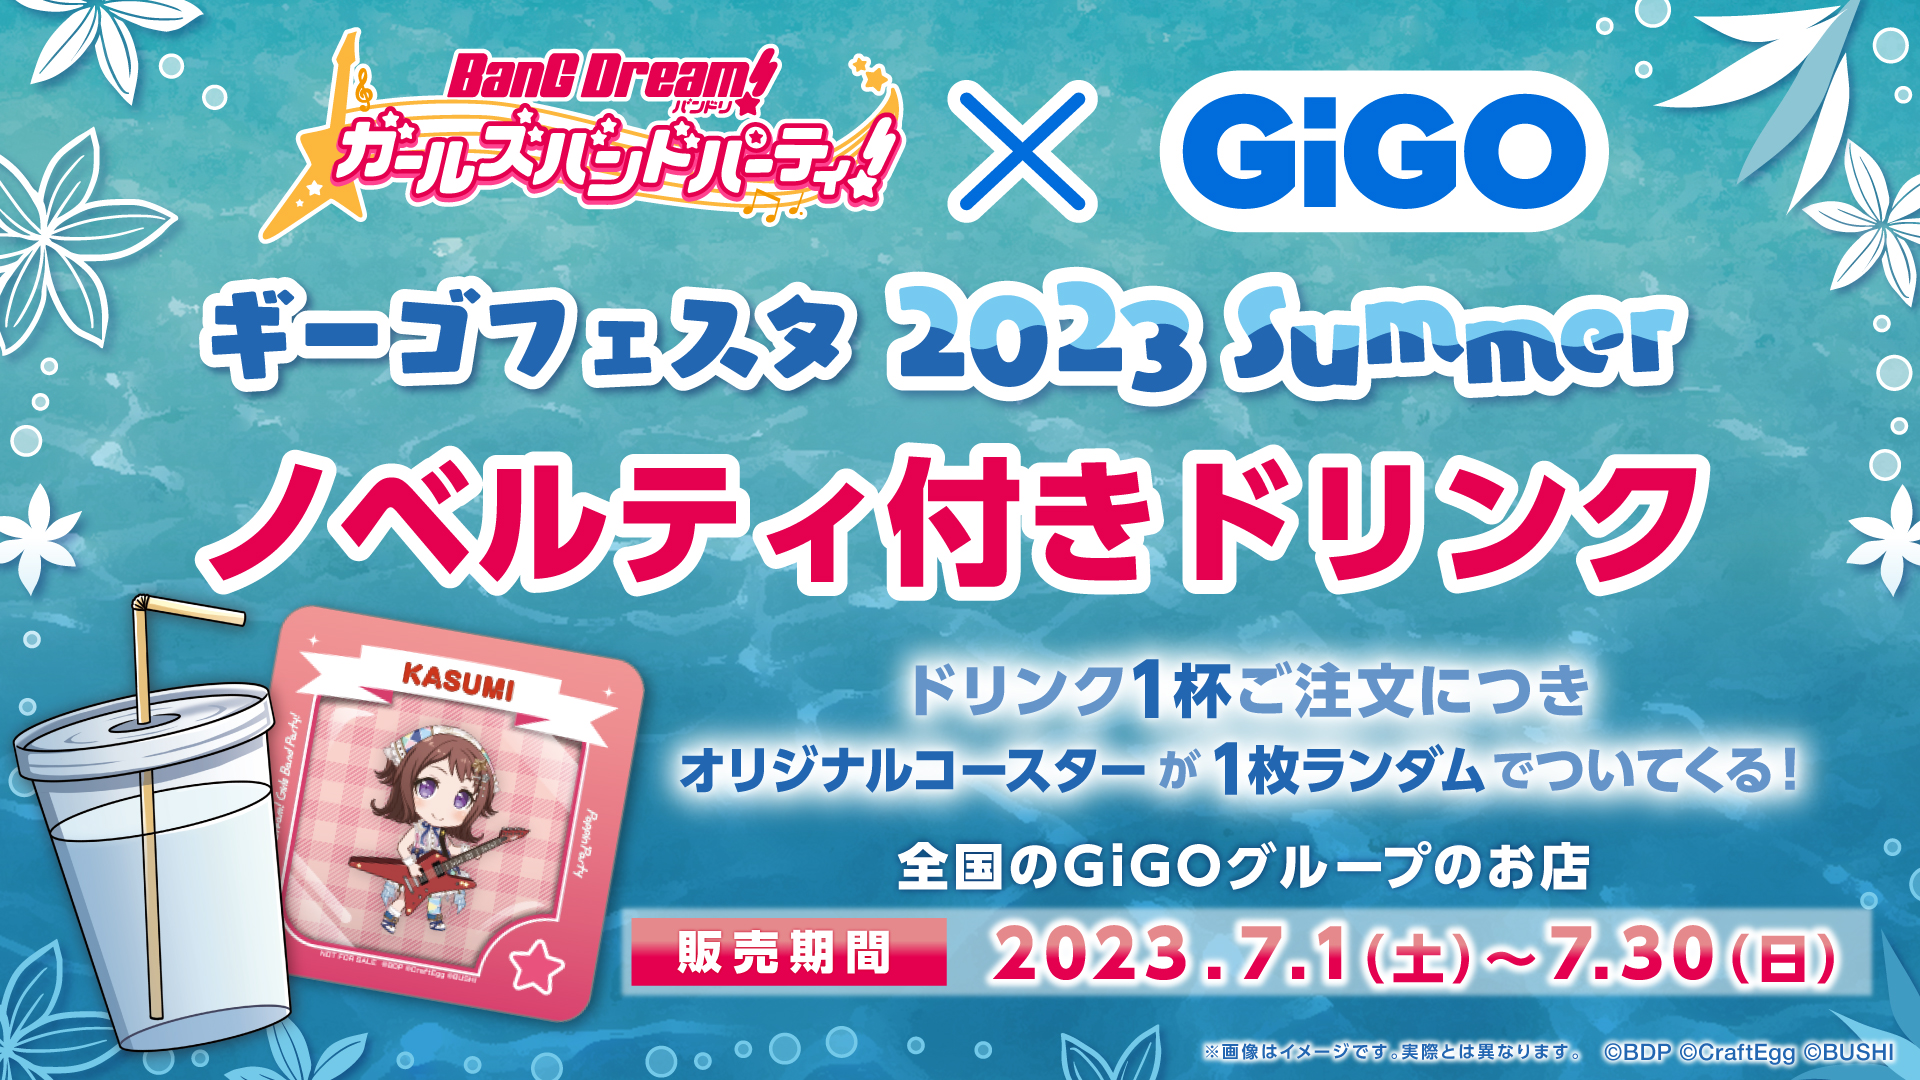 BanG Dream! Girls Band Party x GiGO Festa 2023 Summer, Events